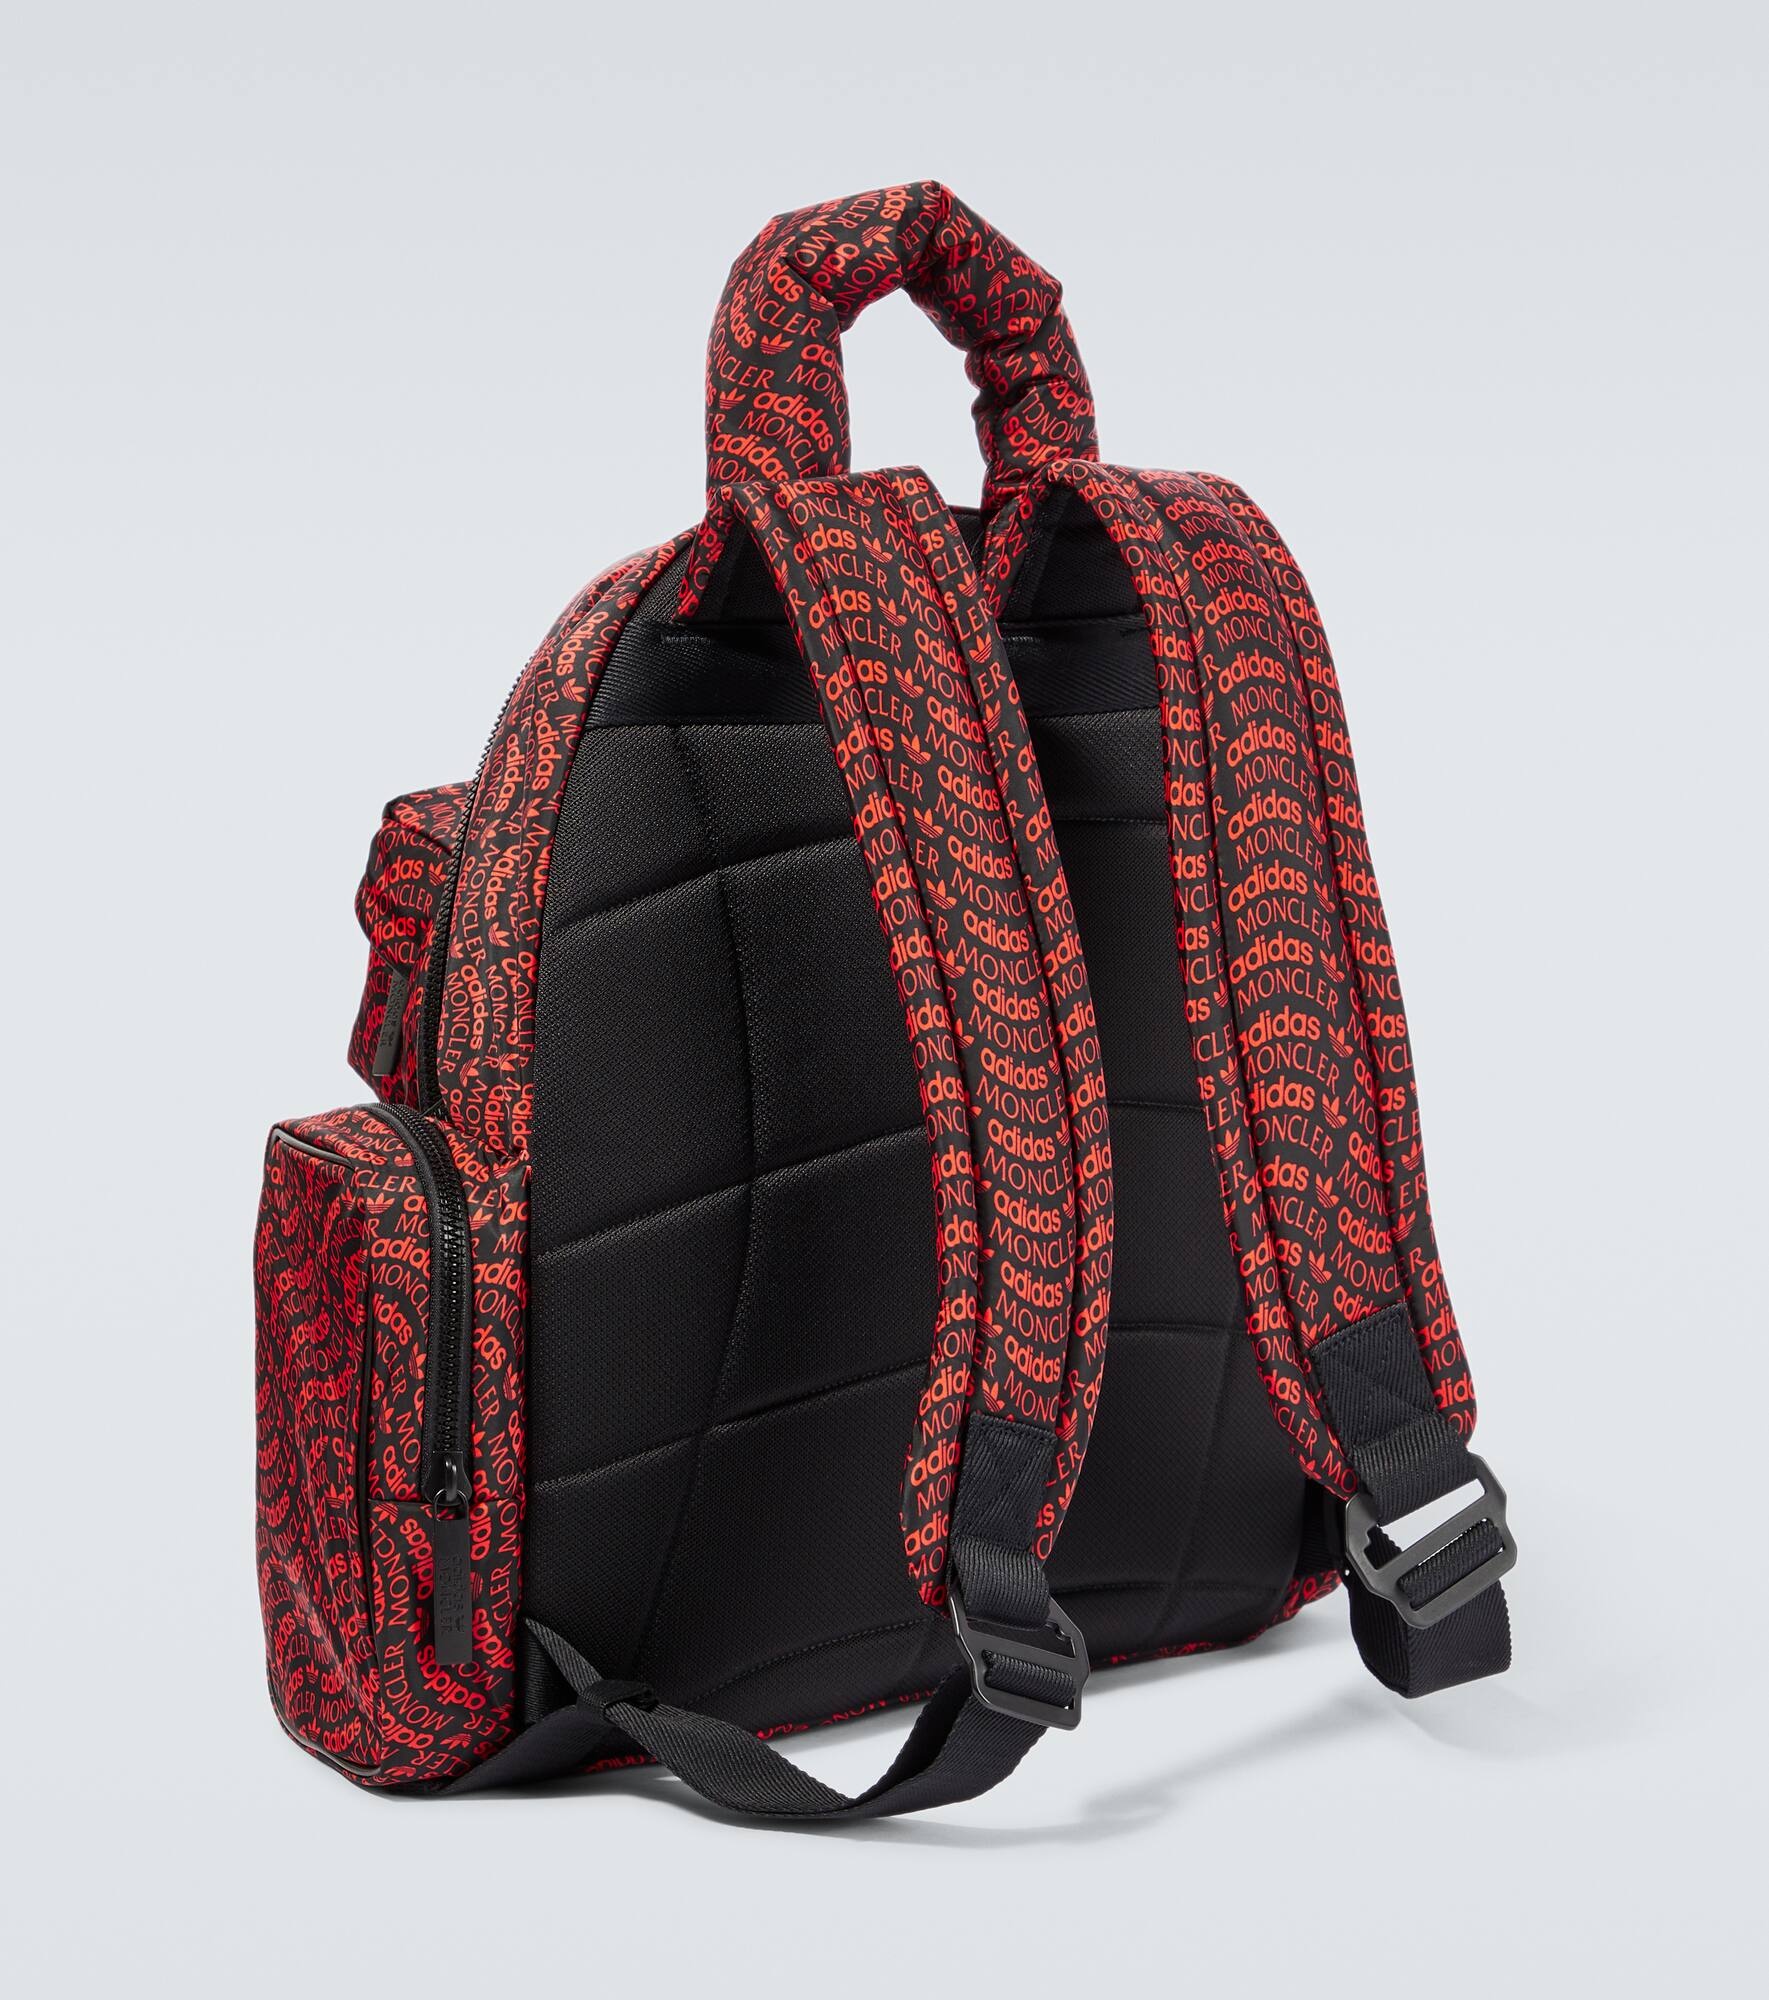 x Adidas printed backpack - 5